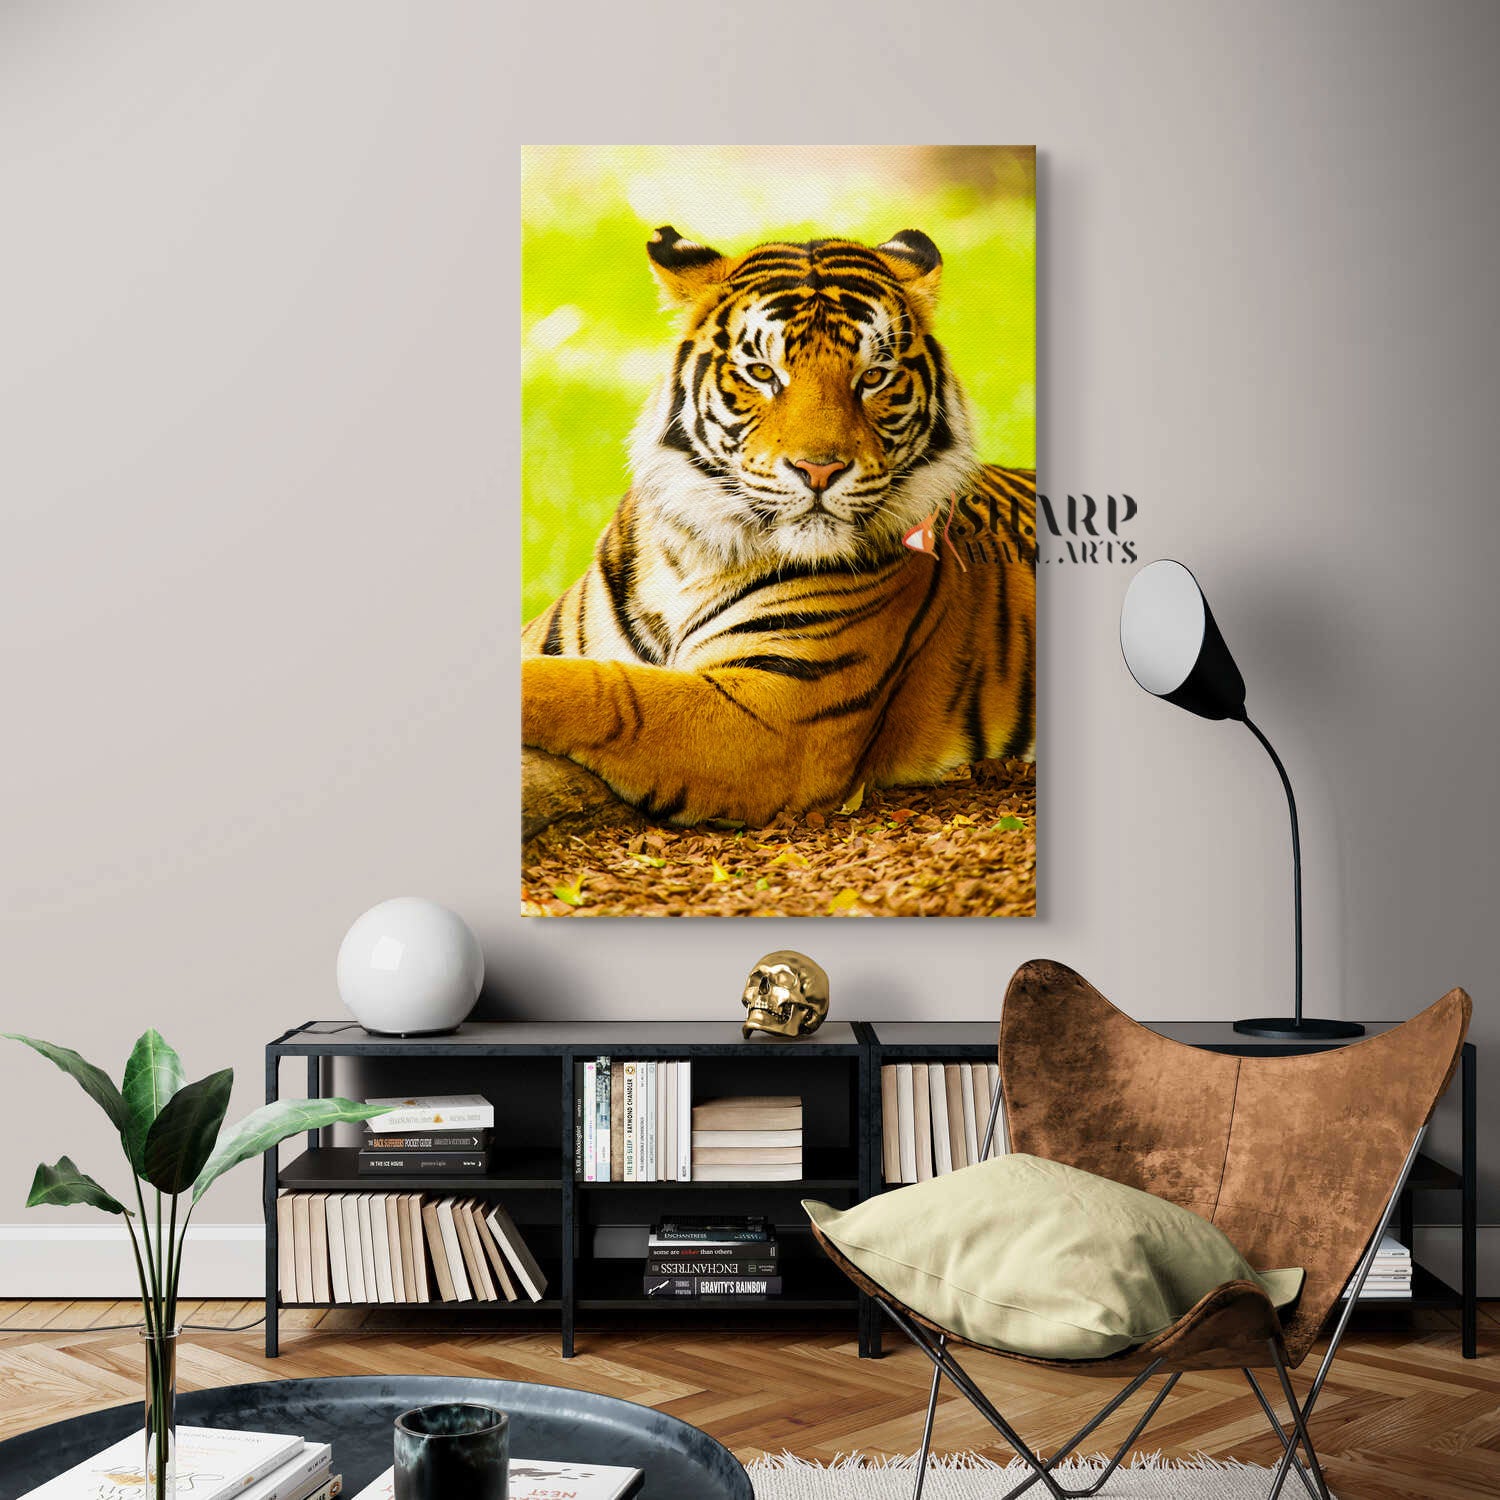 Tiger Wall Art Canvas